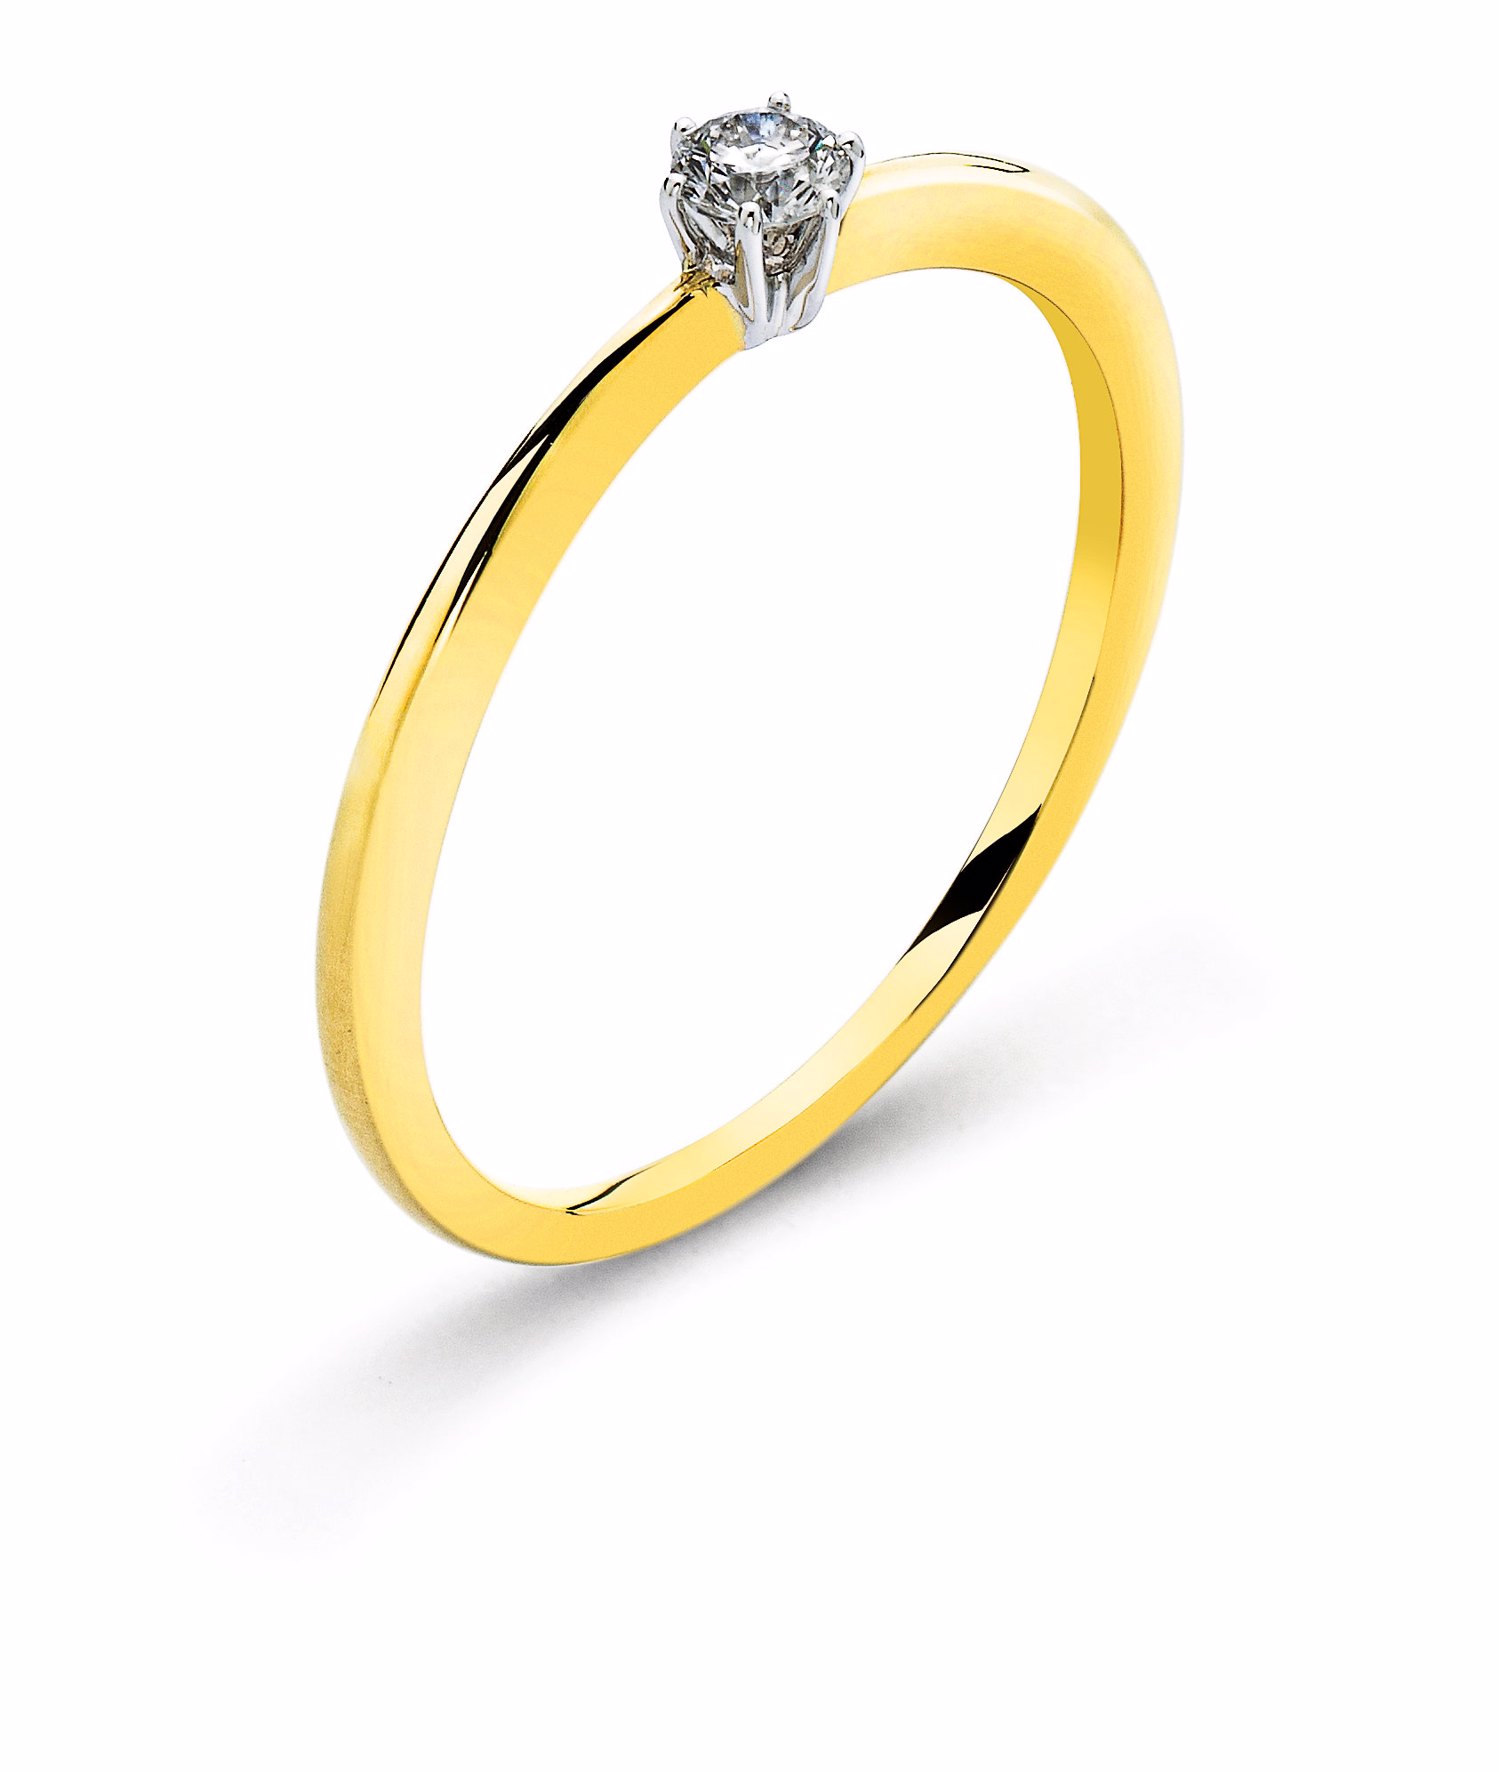 AURONOS Prestige Solitaire Ring Yellow Gold 18K, Setting White Gold Diamond 0.15ct